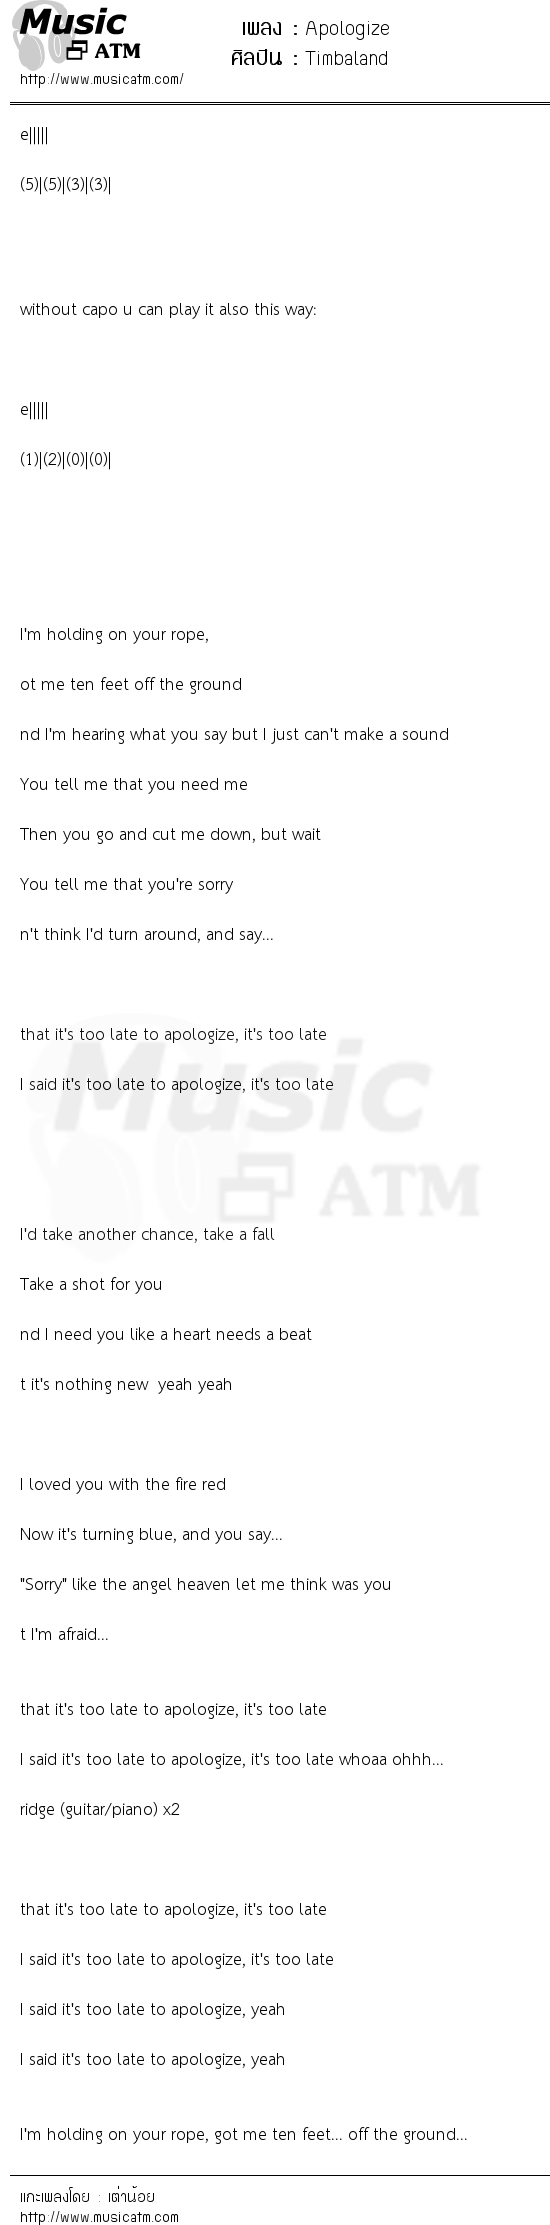 Apologize | เพลงไทย